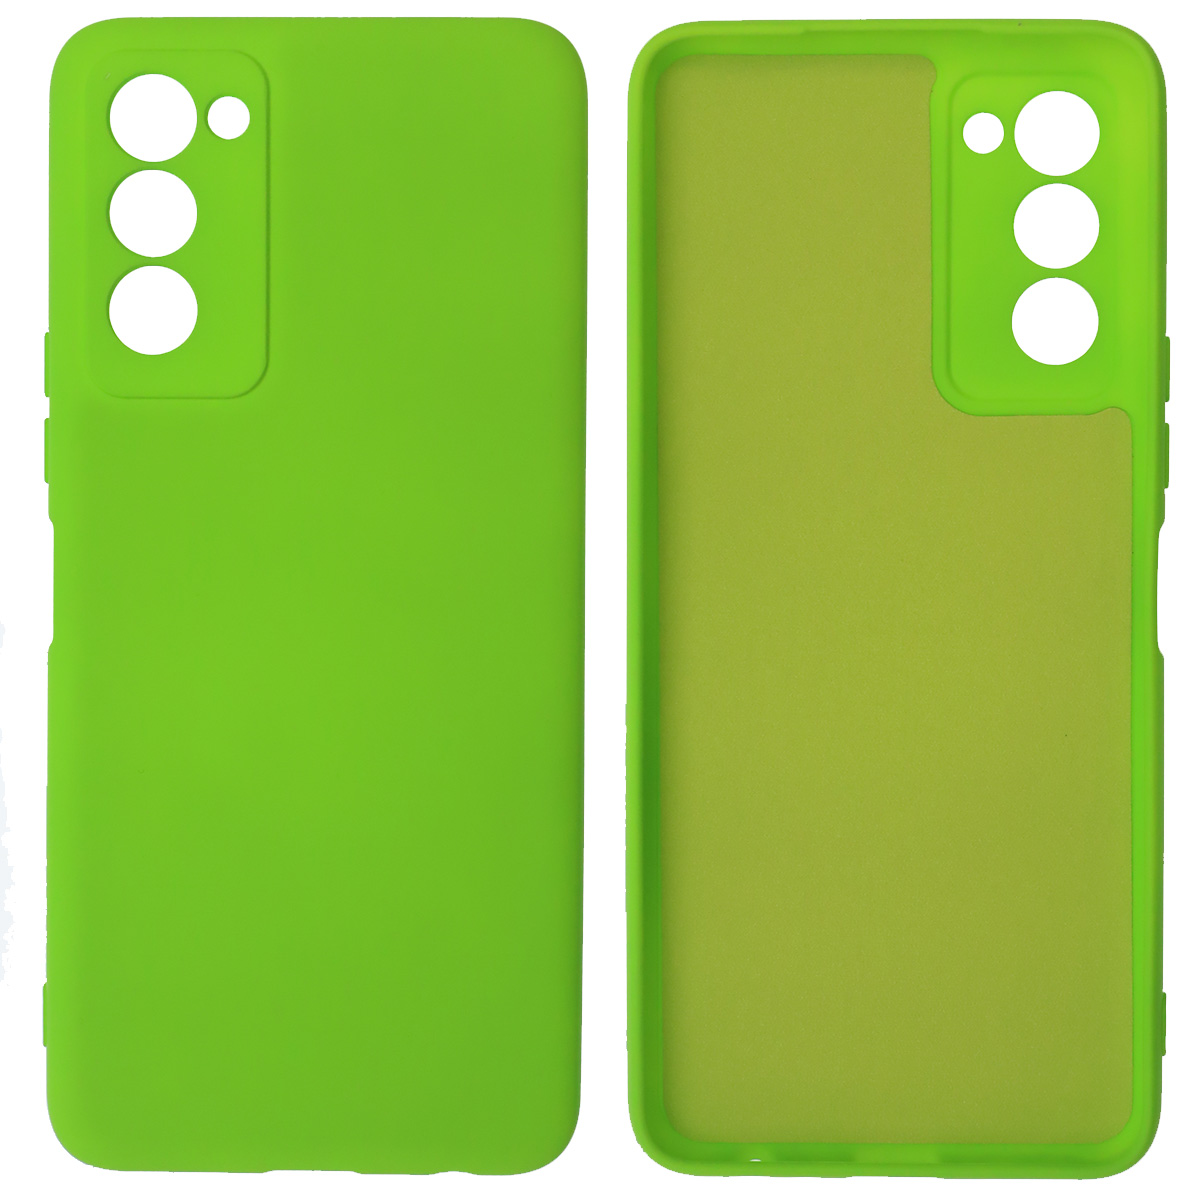 Чехол накладка NANO для TECNO Camon 18, 18P, 18T, силикон, бархат, цвет ярко зеленый